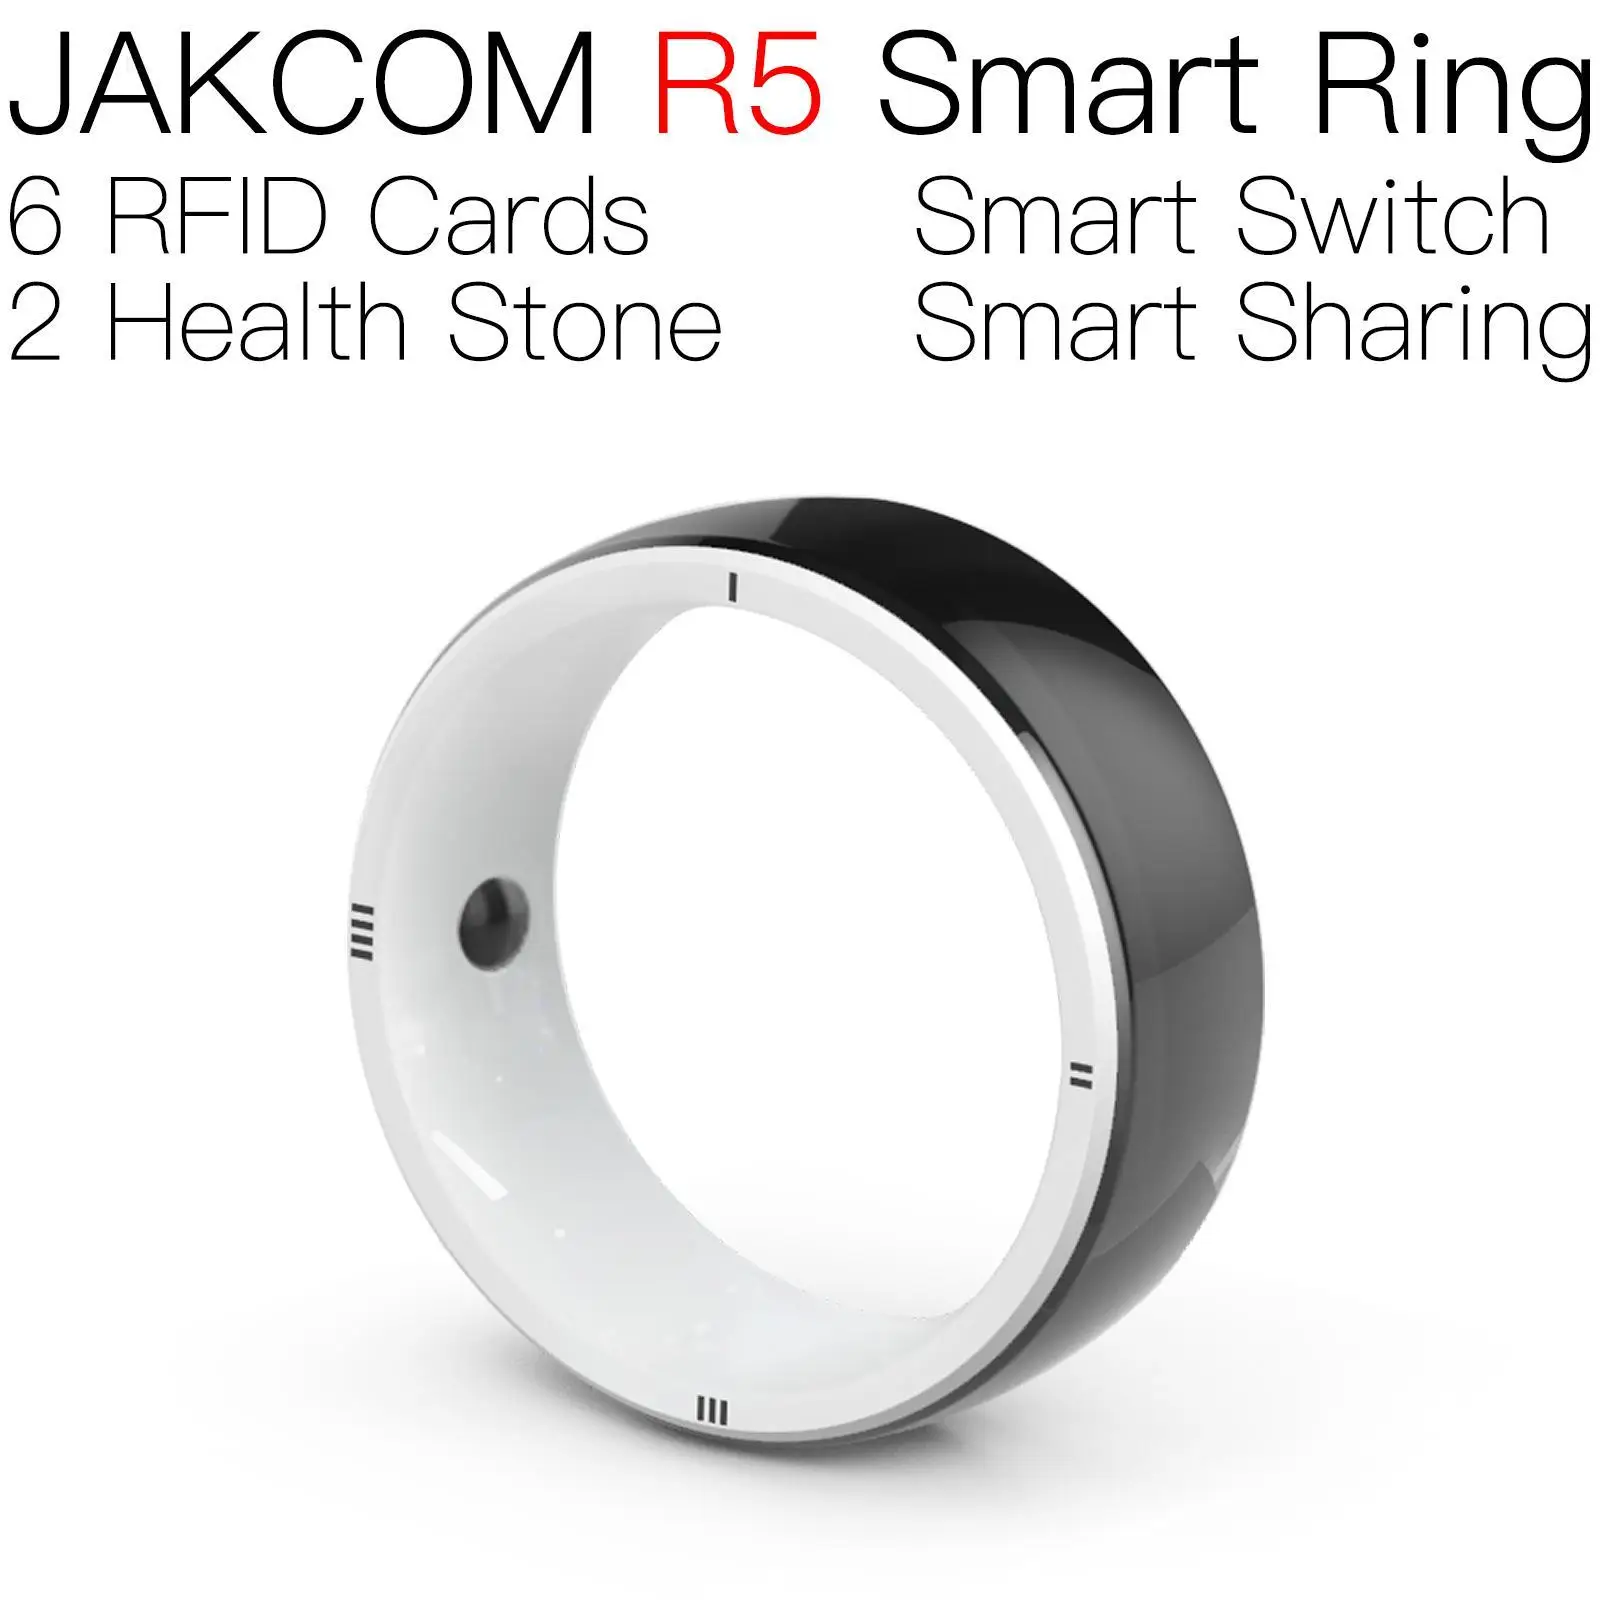 

JAKCOM R5 Smart Ring Super value than square nfc tag black card chip badge rfid uid modifiable vigik poker chips relay car door